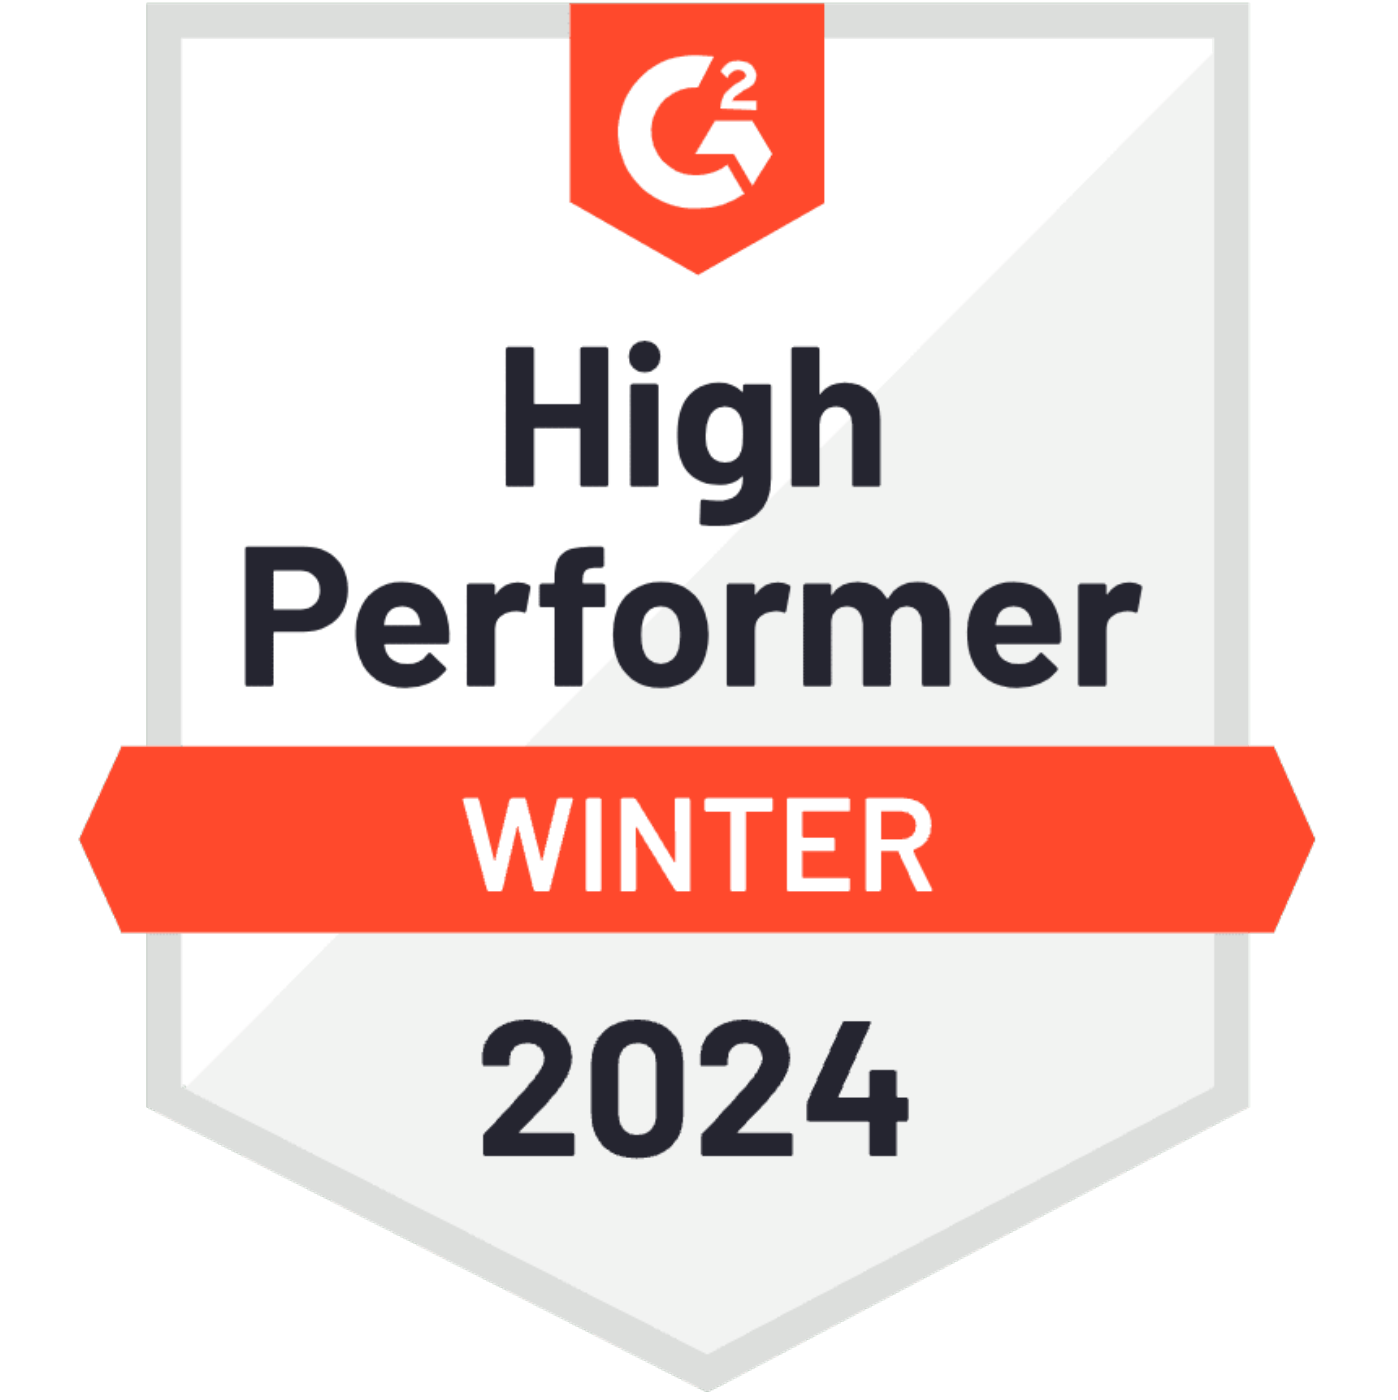 G2 Badge: High Performer Winter 2024